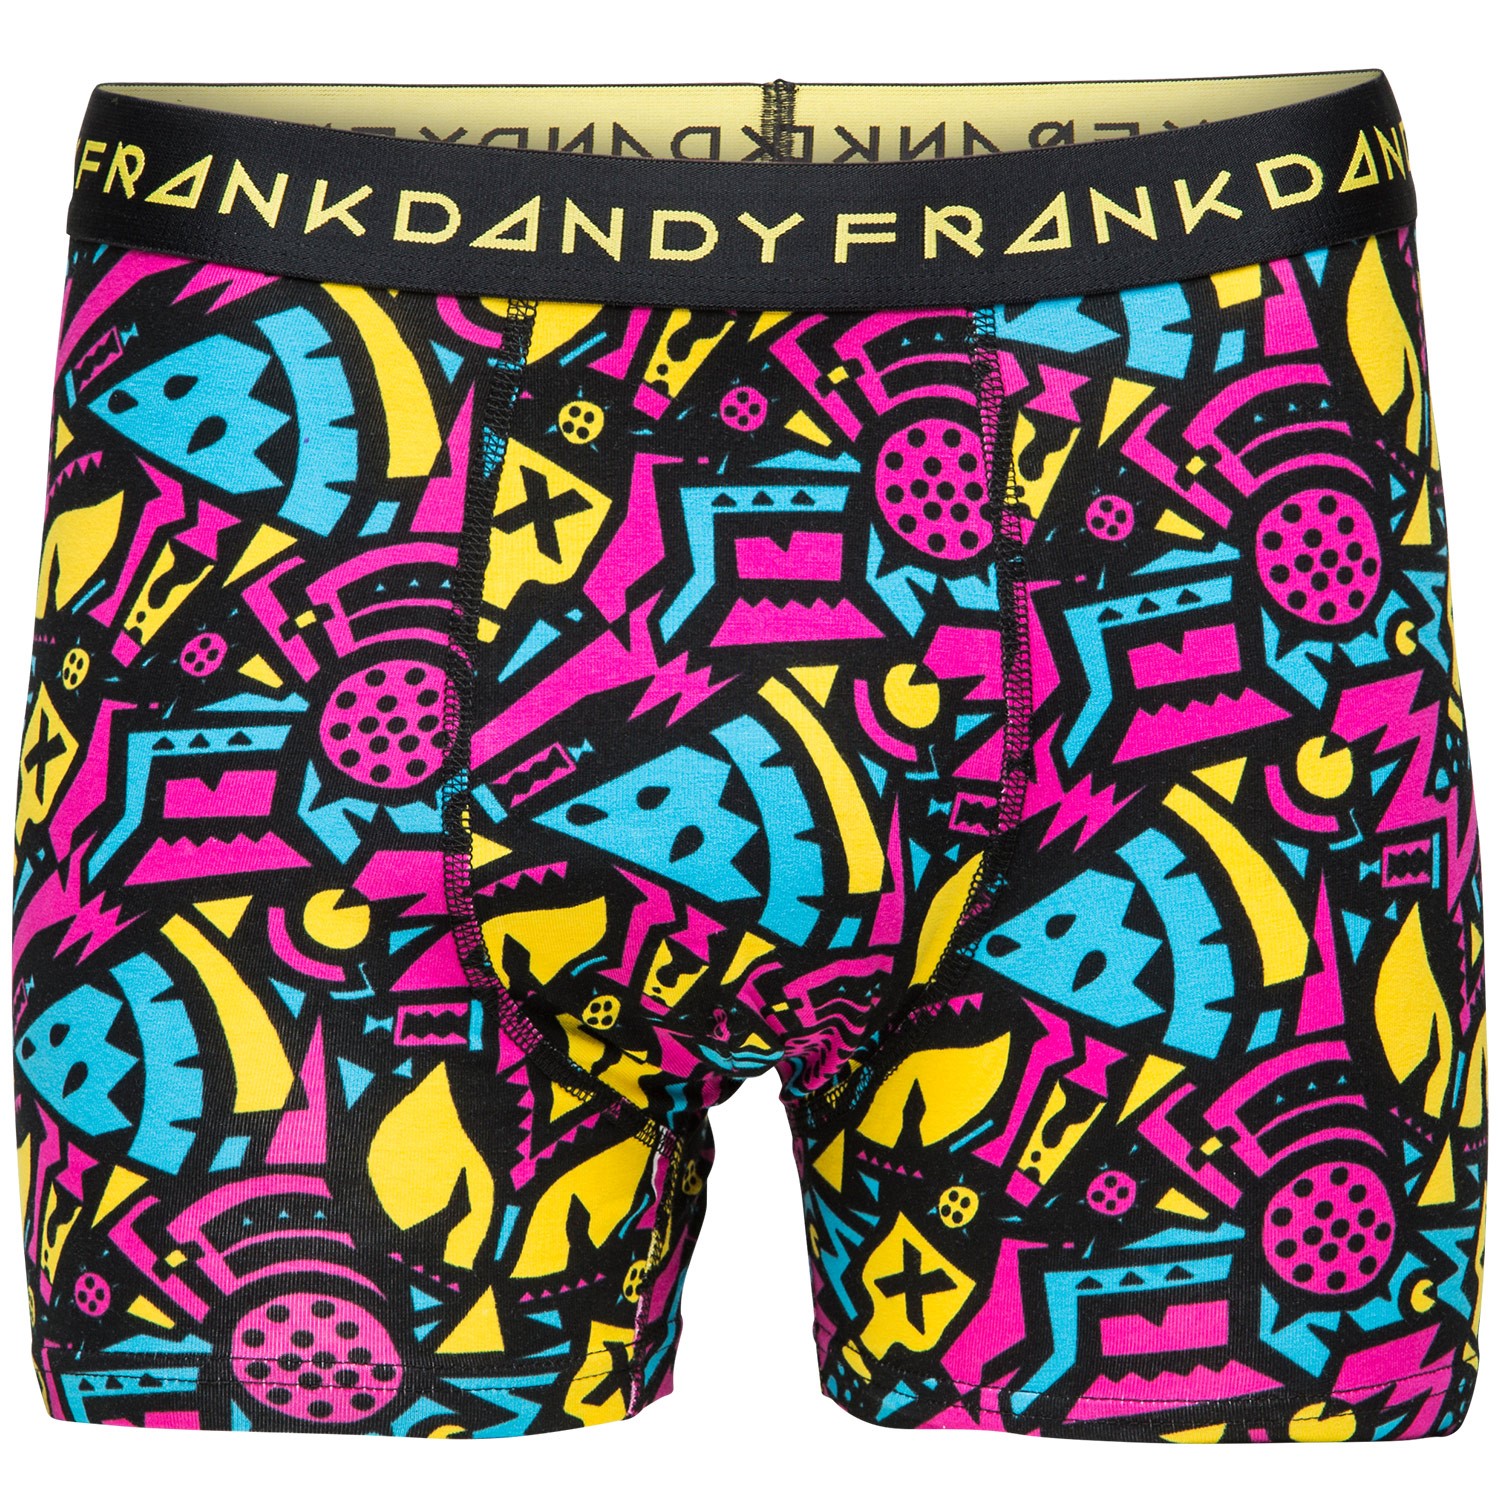 Frank Dandy Abide Boxer - Boxer - Trunks - Underwear - Timarco.co.uk